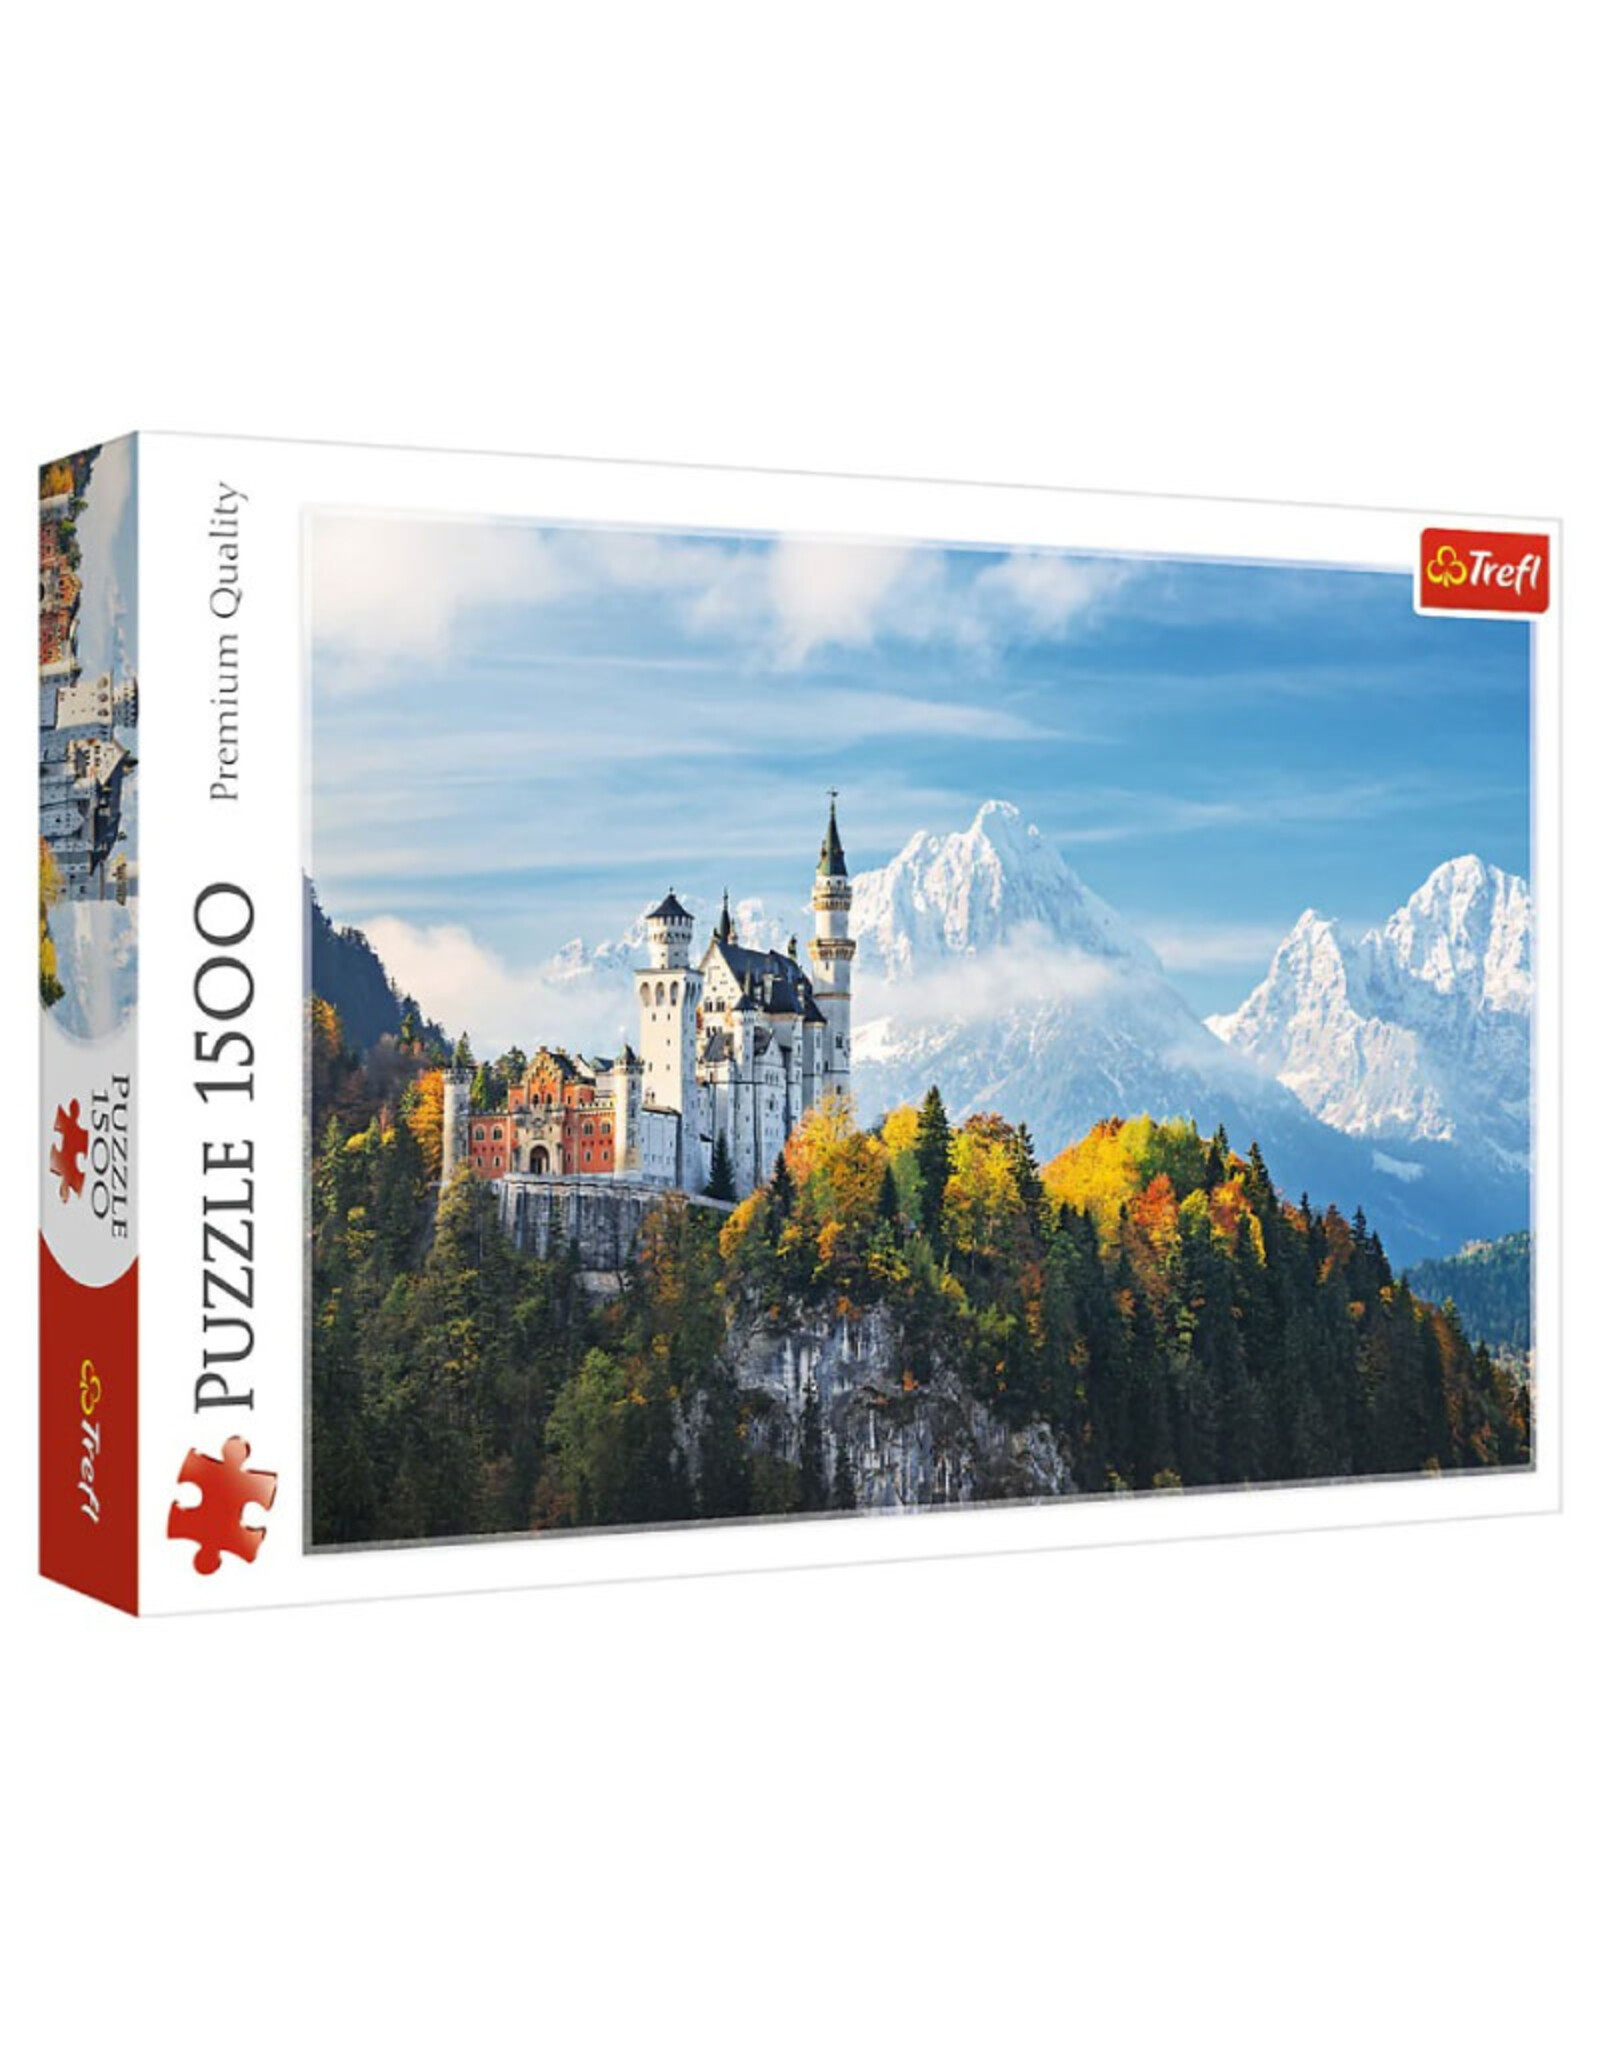 Trefl Bavarian Alps Puzzle (1500 PCS)